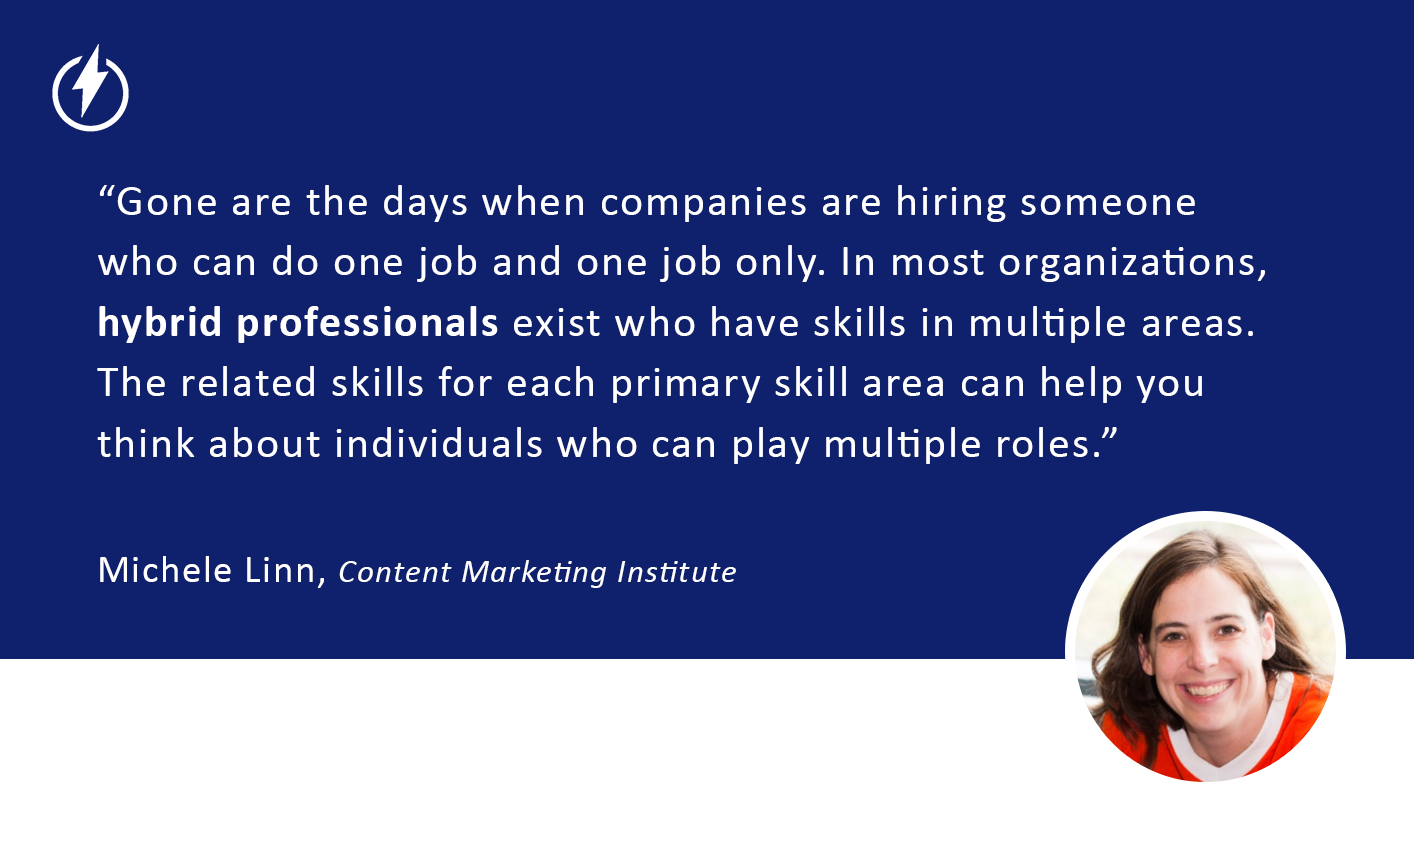 Michele Lin, Content Marketing Institute Quote